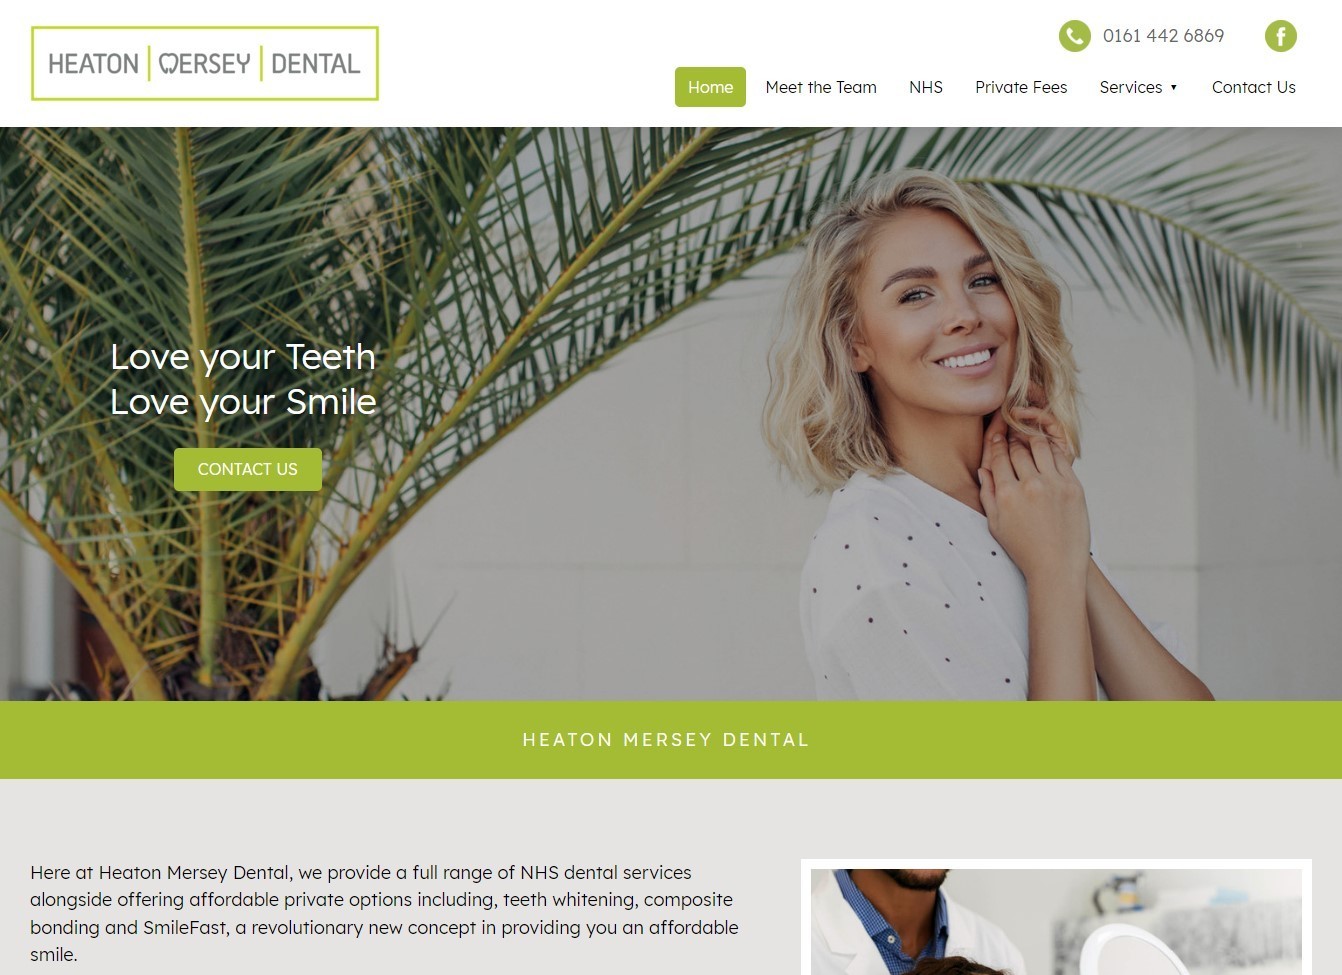 Heaton Mersey Dental website